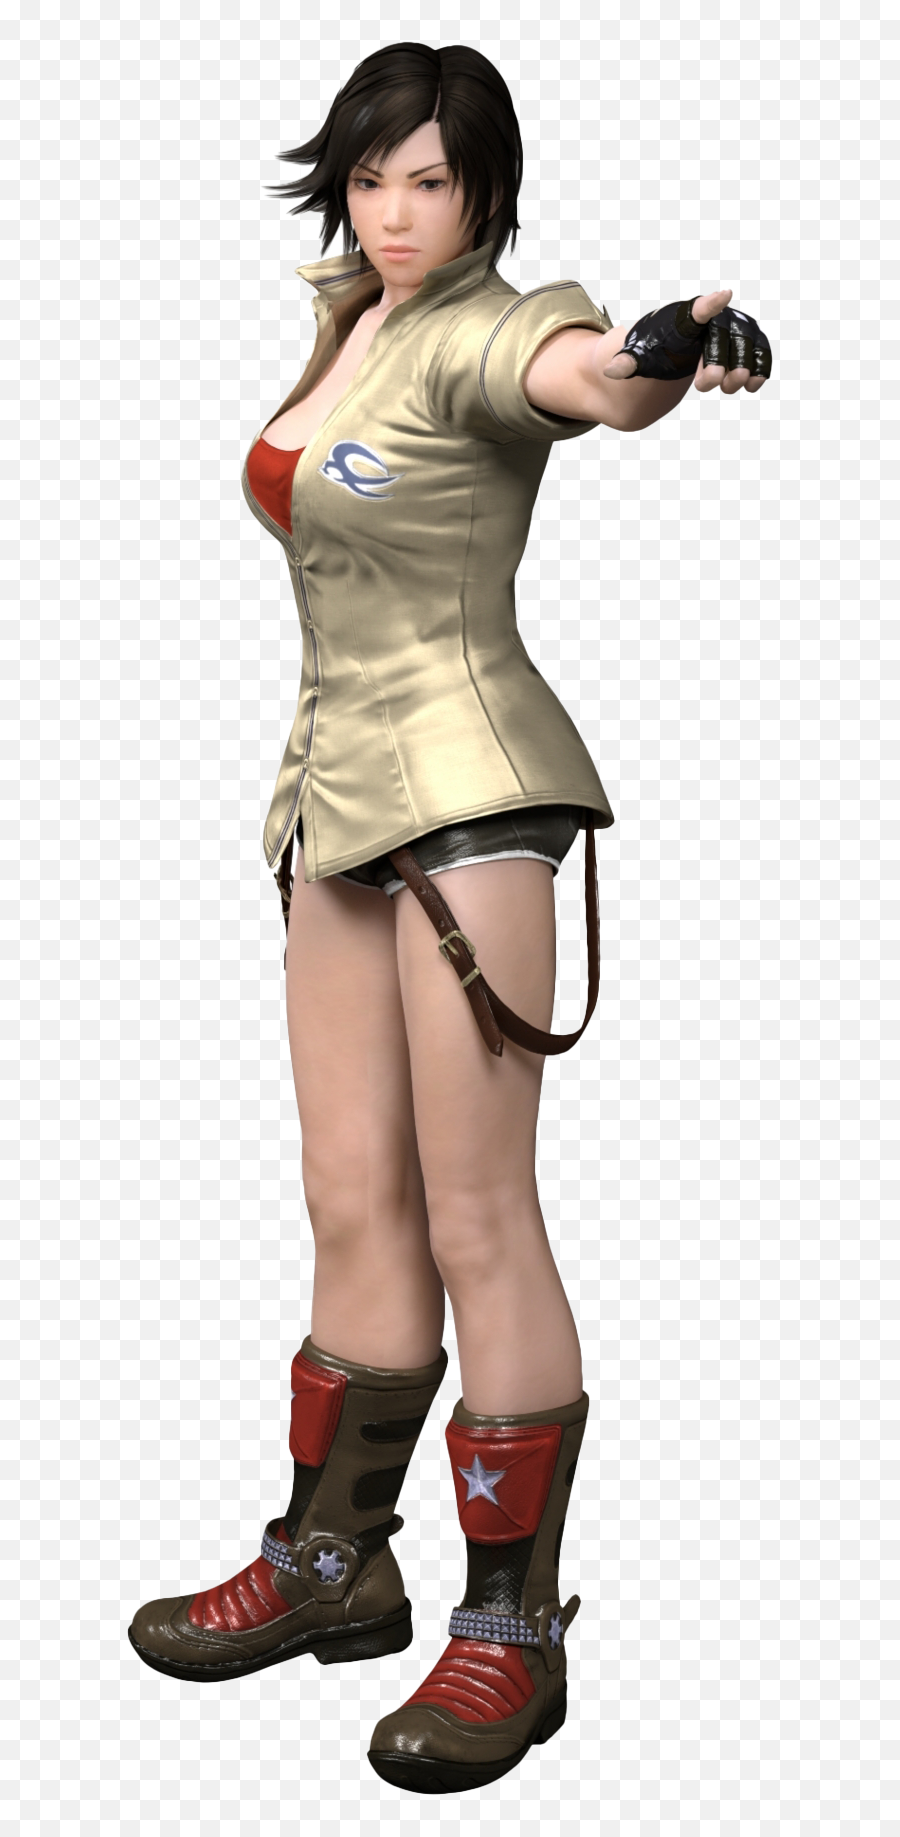 Asuka Kazama Png Image - Asuka Kazama Tekken 7,Asuka Png